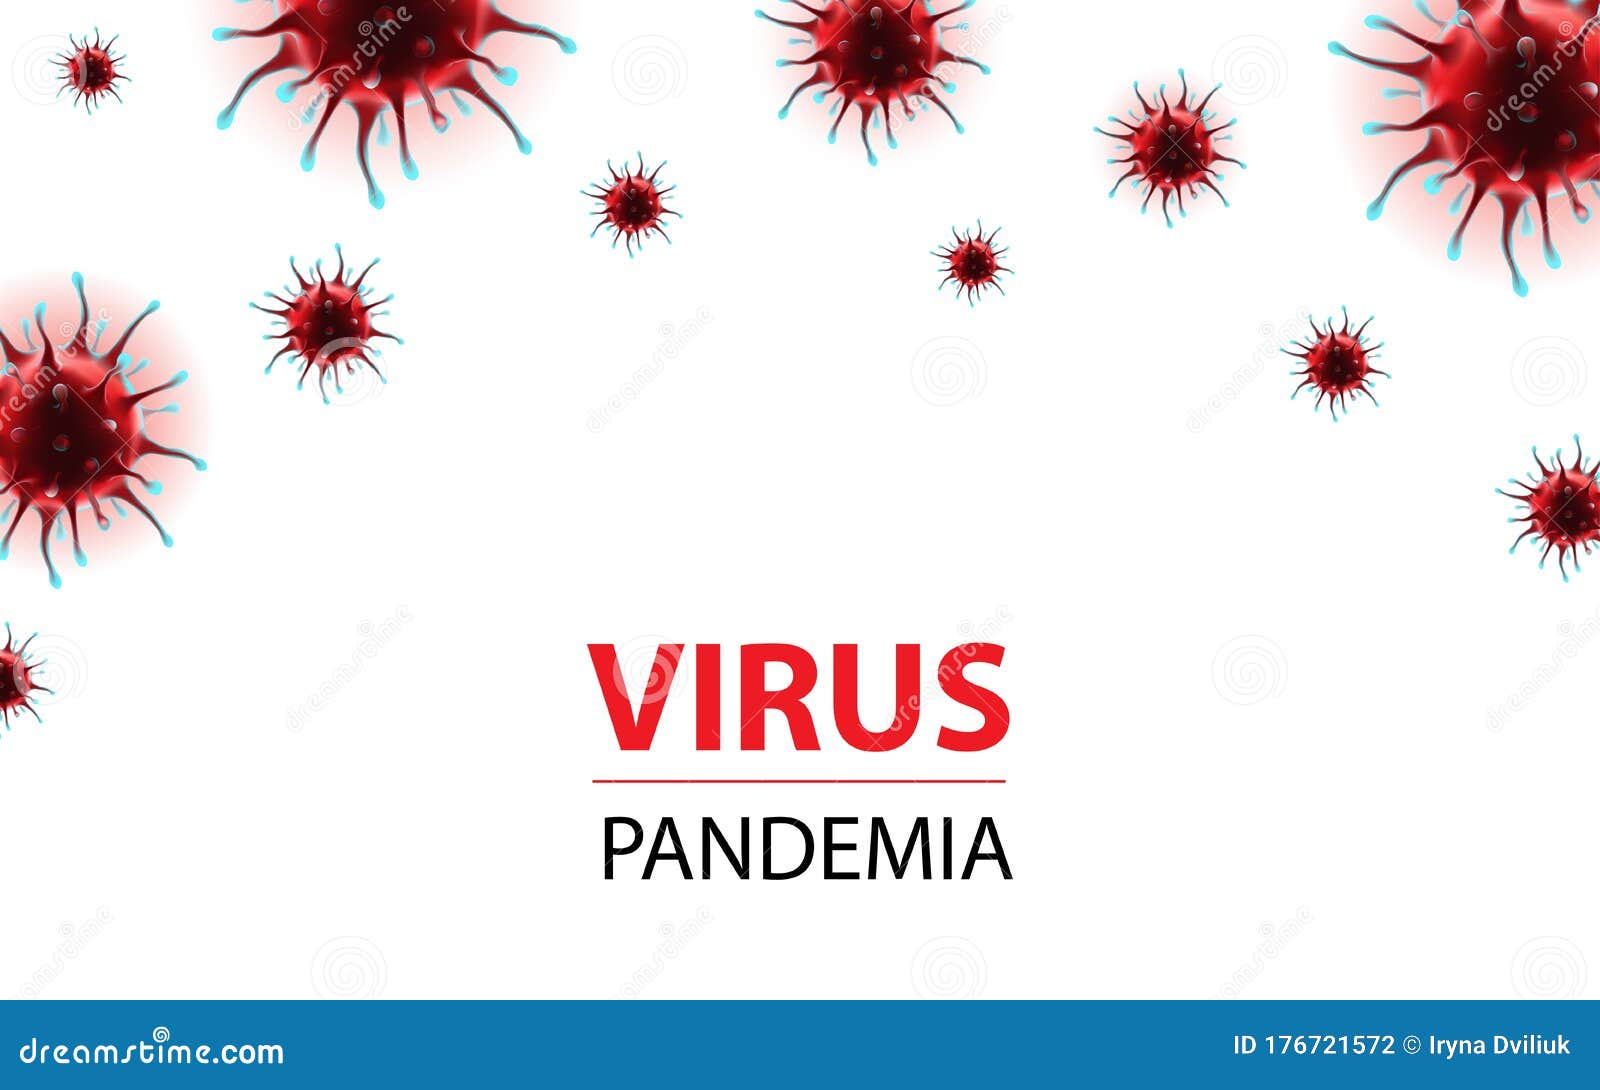 horizontal social media banner epidemia coronavirus virus 